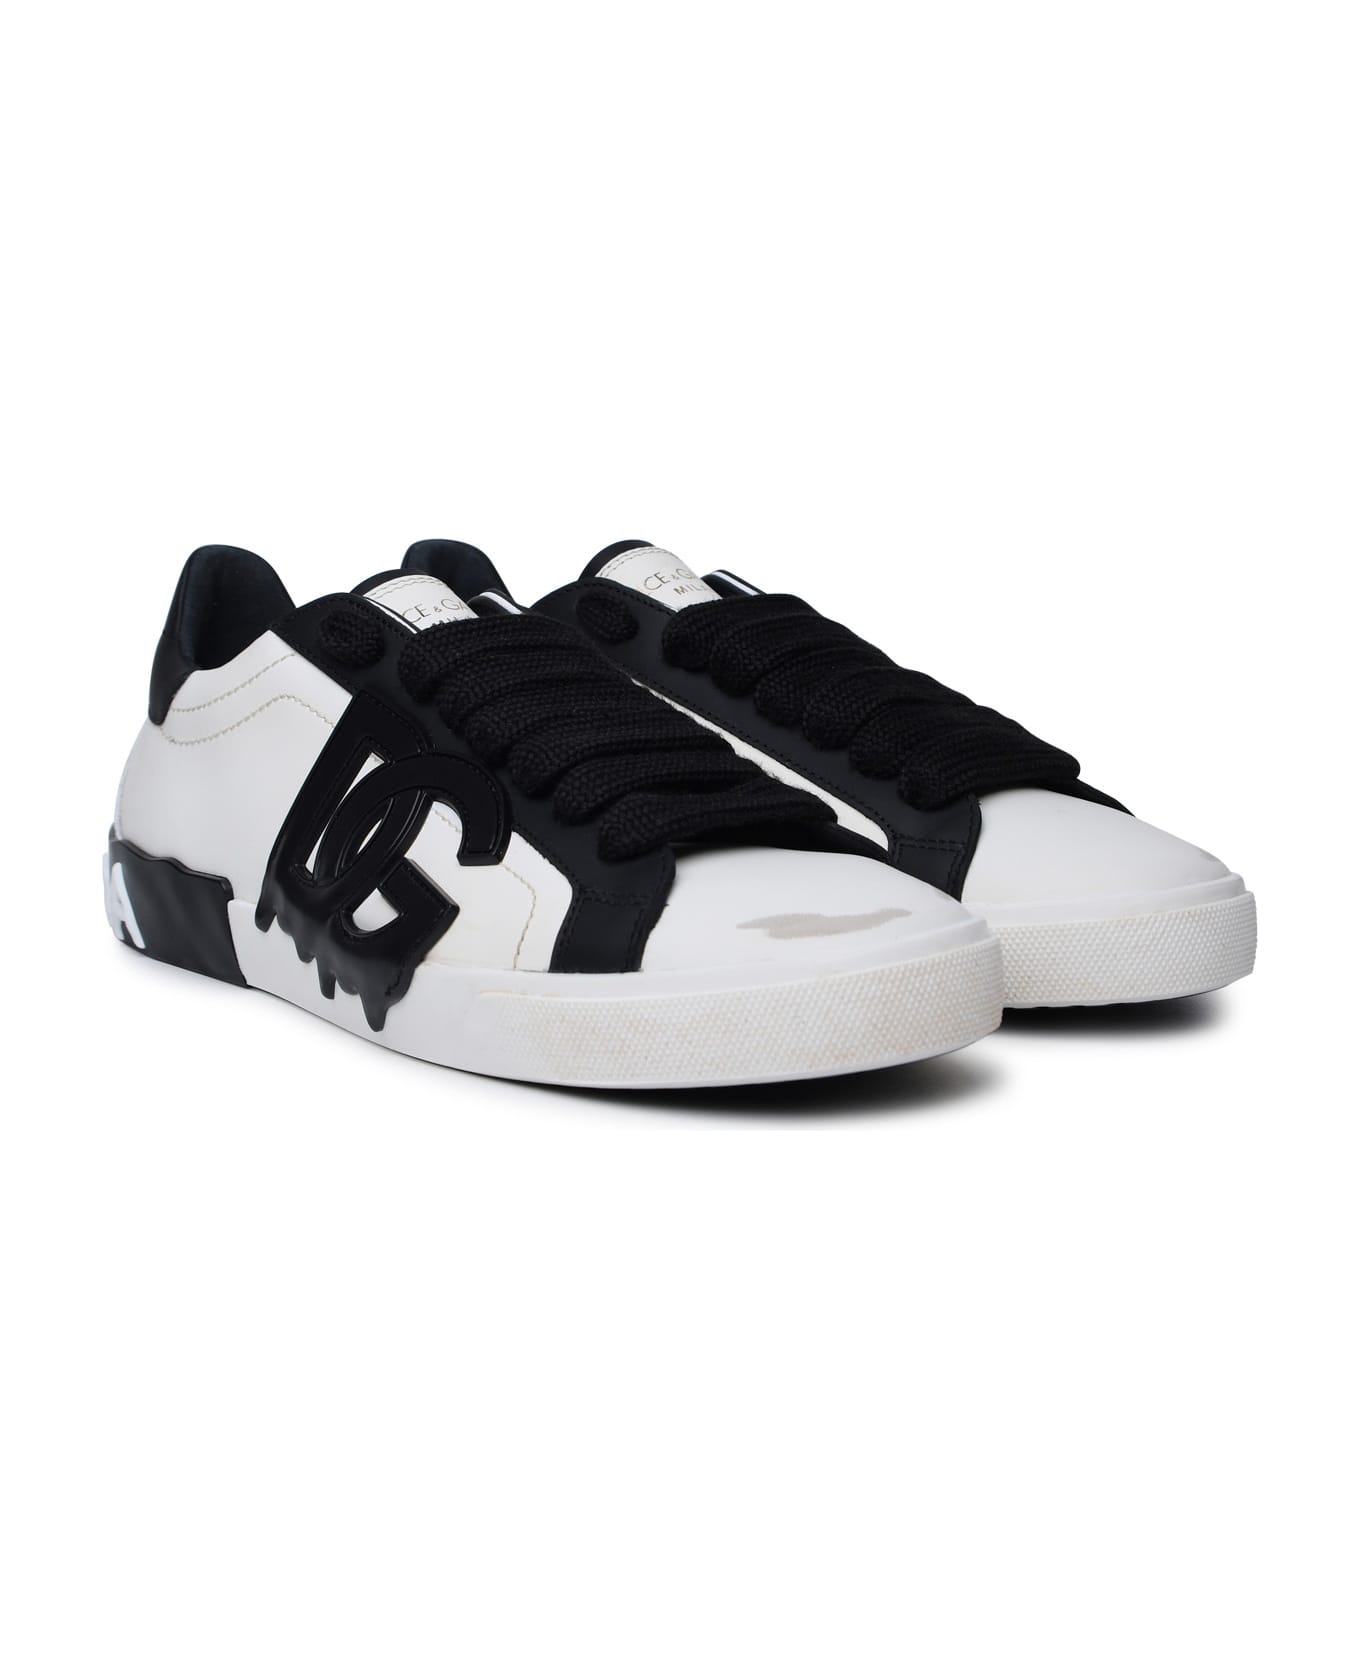 Dolce & Gabbana Portofino Vintage Leather Sneaker - white/black